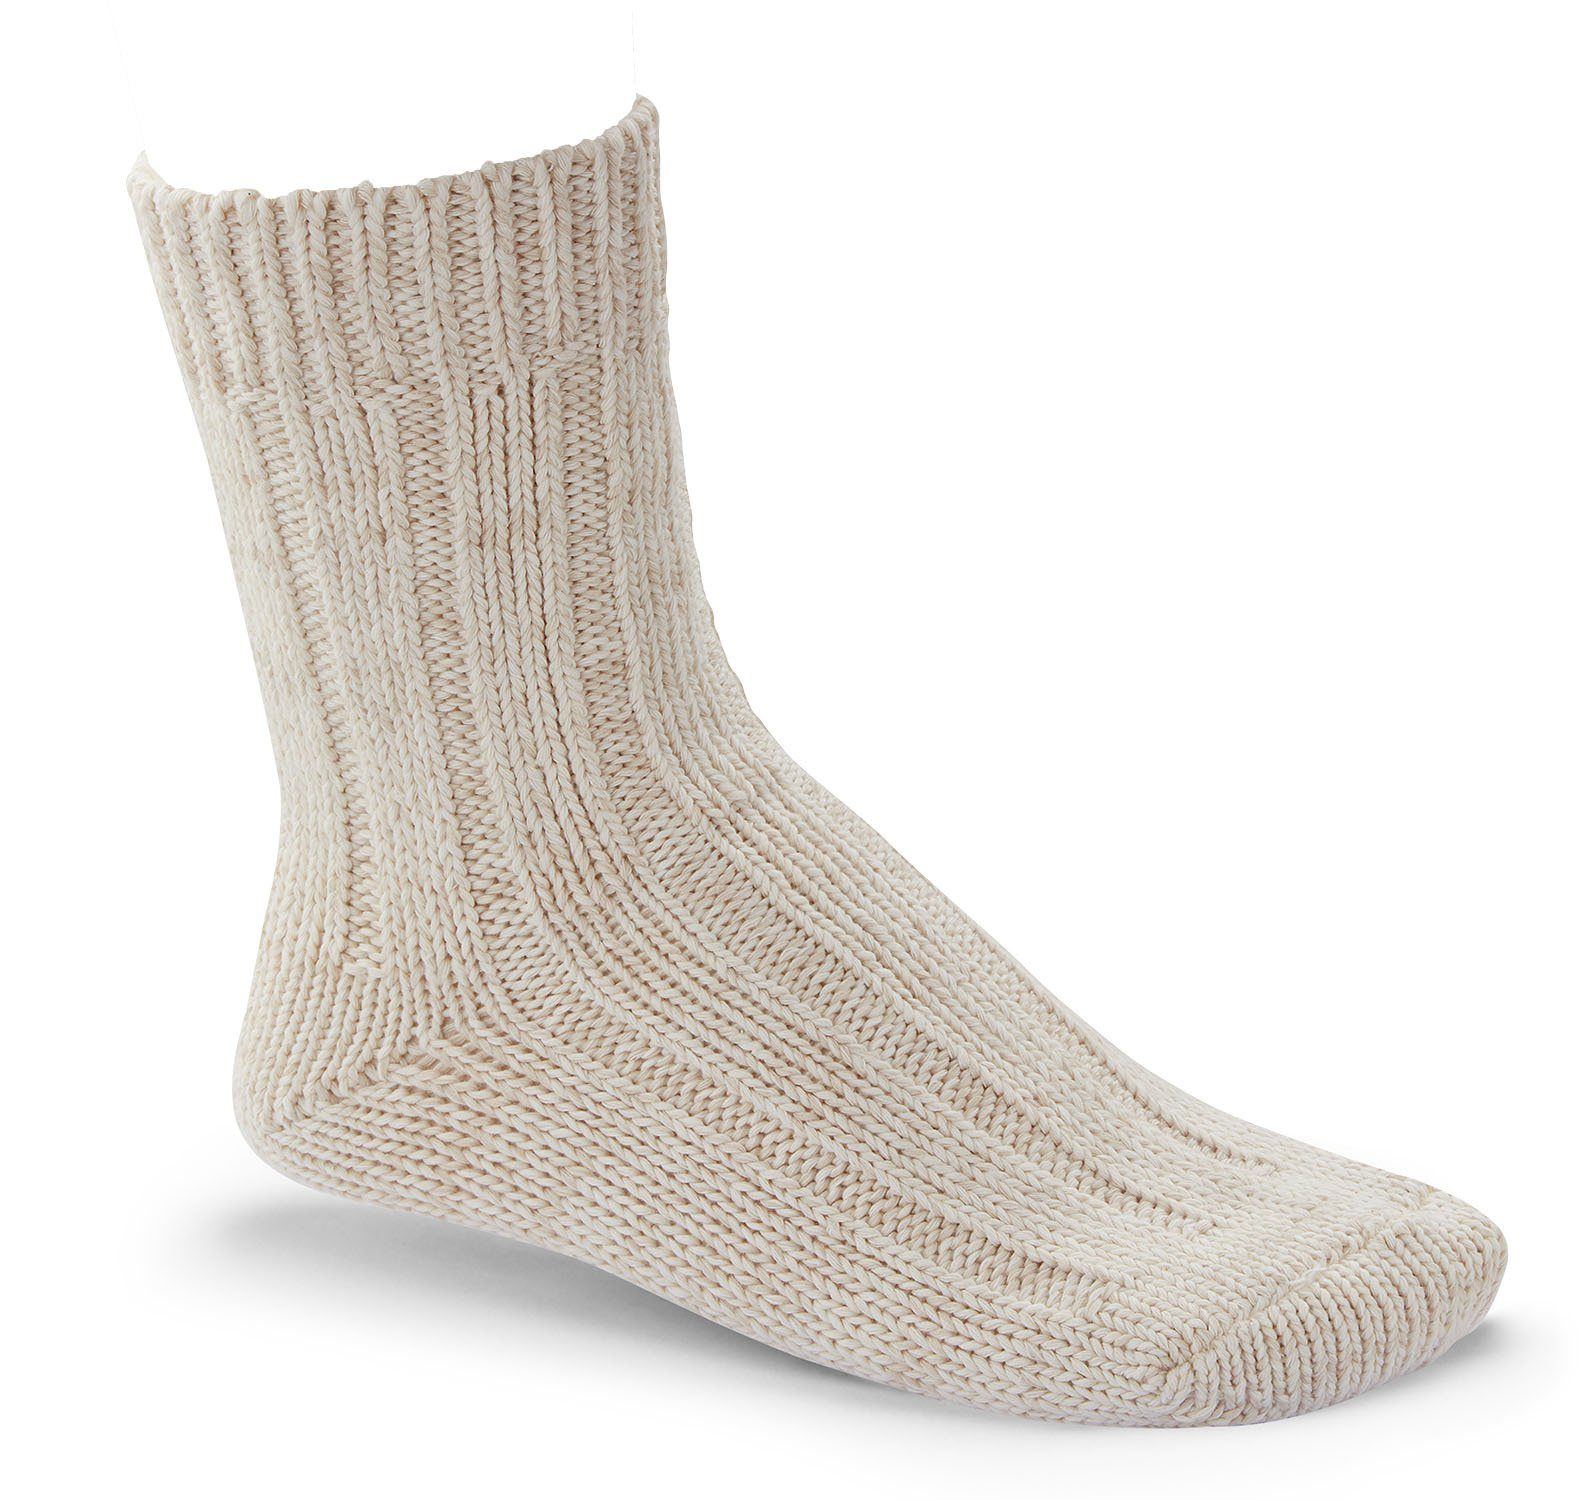 Birkenstock Kurzsocken Damen Socken - Strumpf, Twist Cotton Weiß